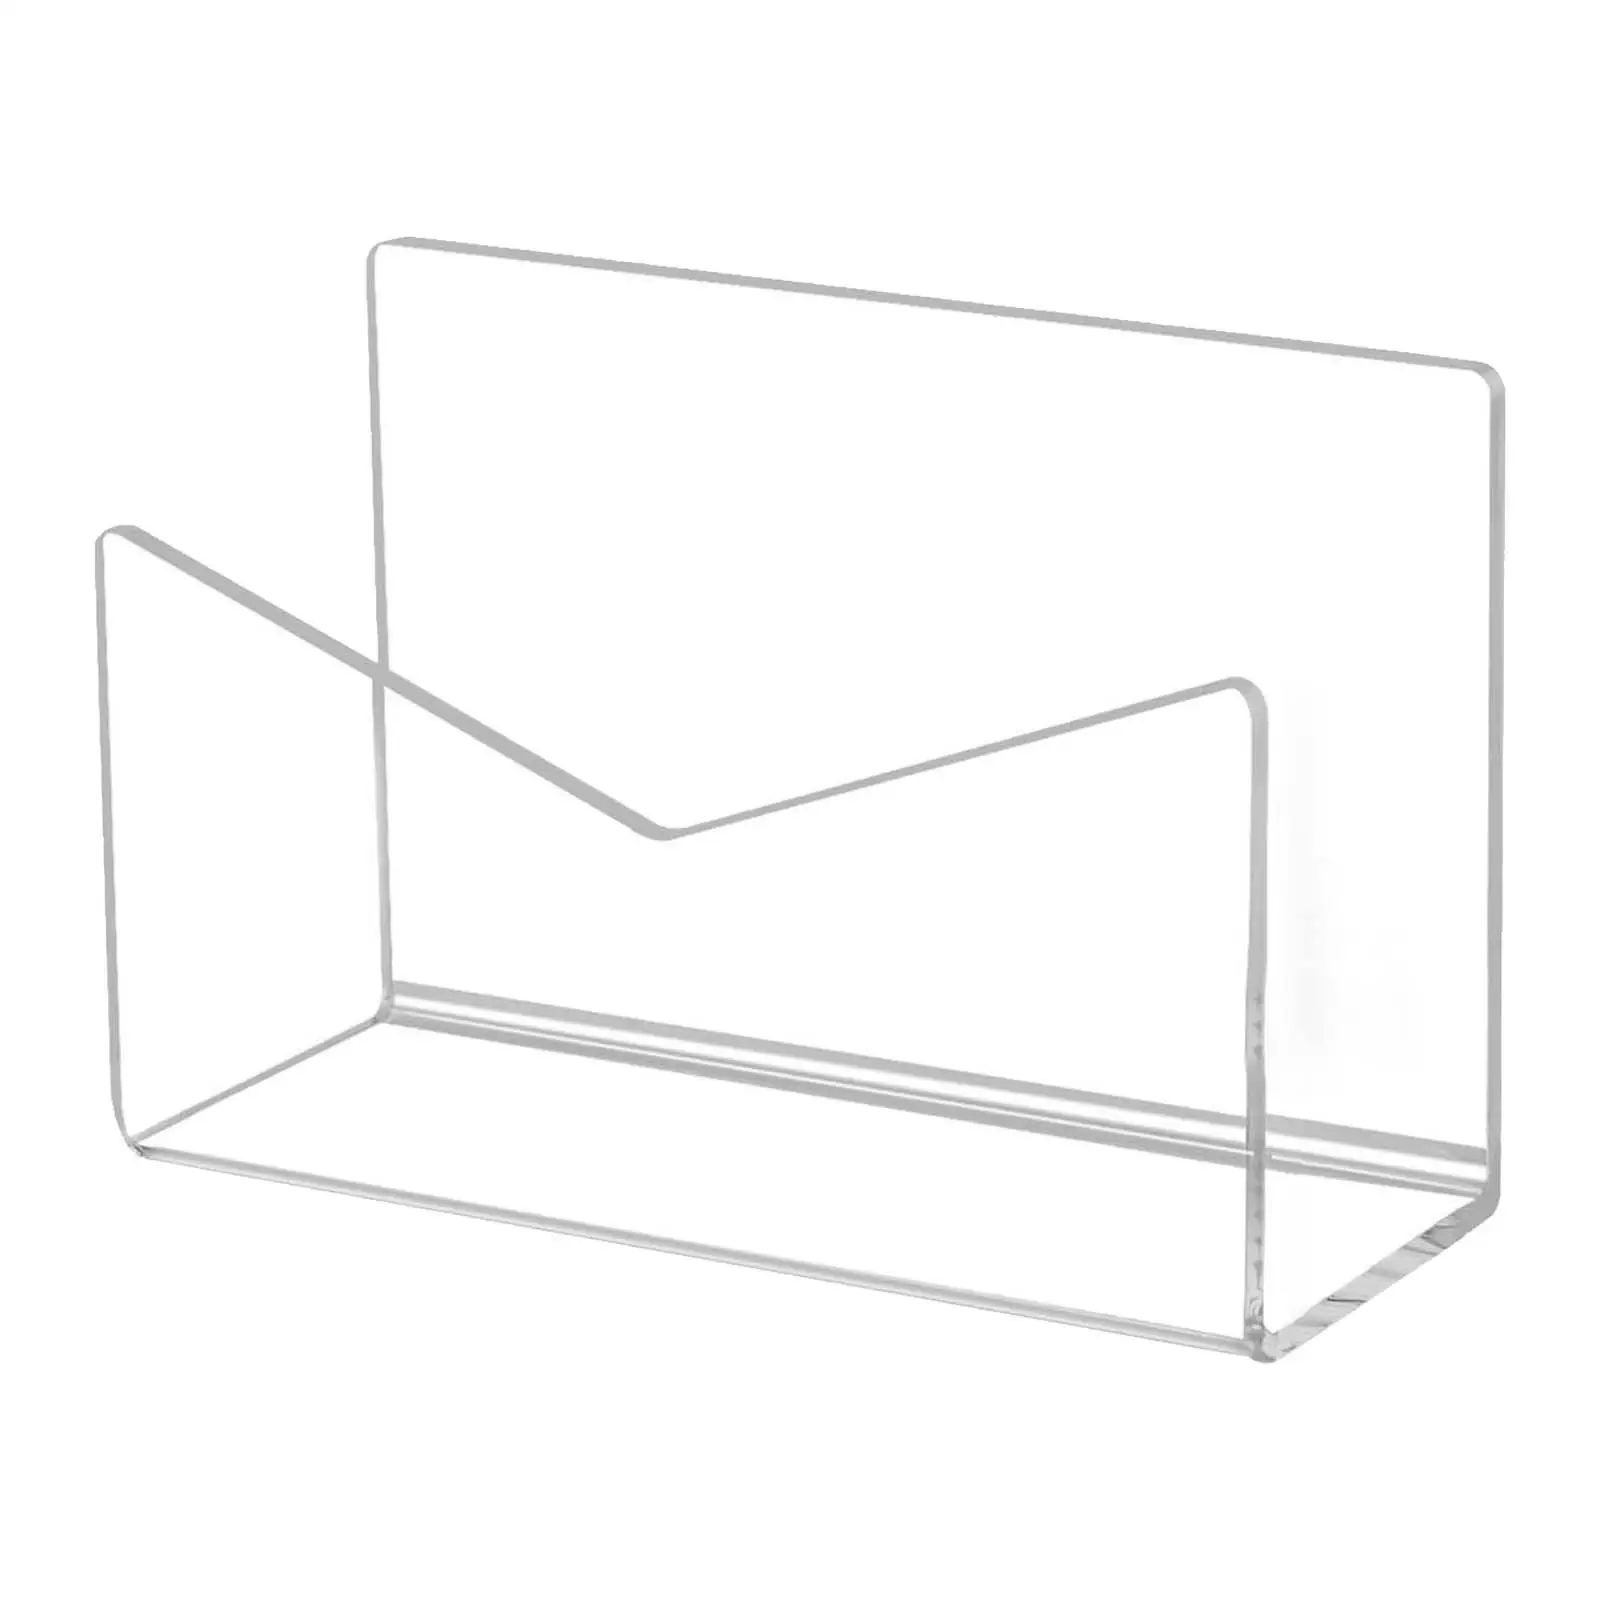 

Mail Organizer Organization Book File Storage Rack Desktop Letter Holder Letter Rack for Home Classroom Office Countertop School